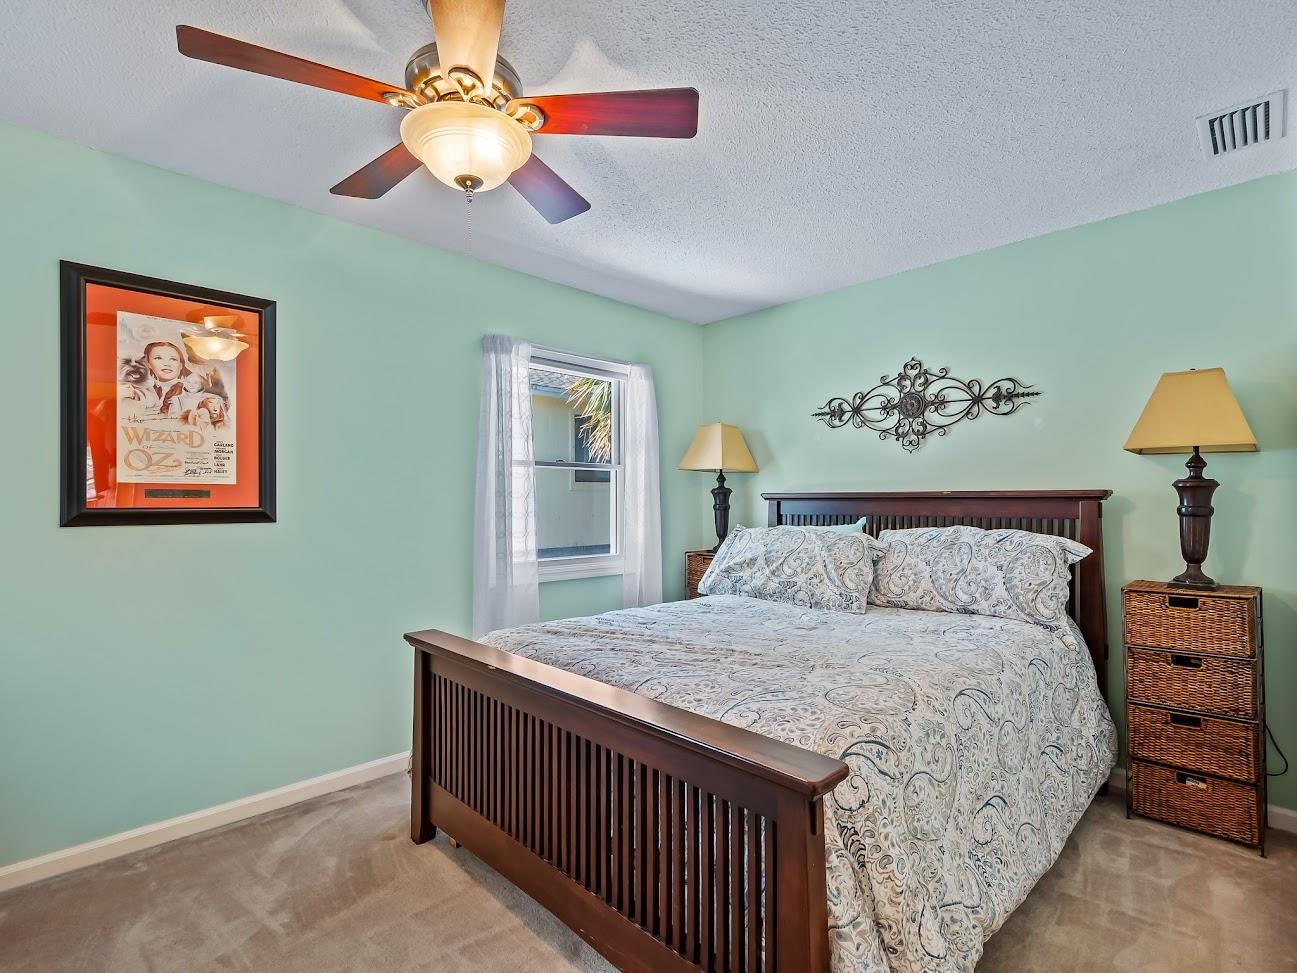 16 Sandpiper Lane,CRAWFORDVILLE,Florida 32327,3 Bedrooms Bedrooms,2 BathroomsBathrooms,Detached single family,16 Sandpiper Lane,369860